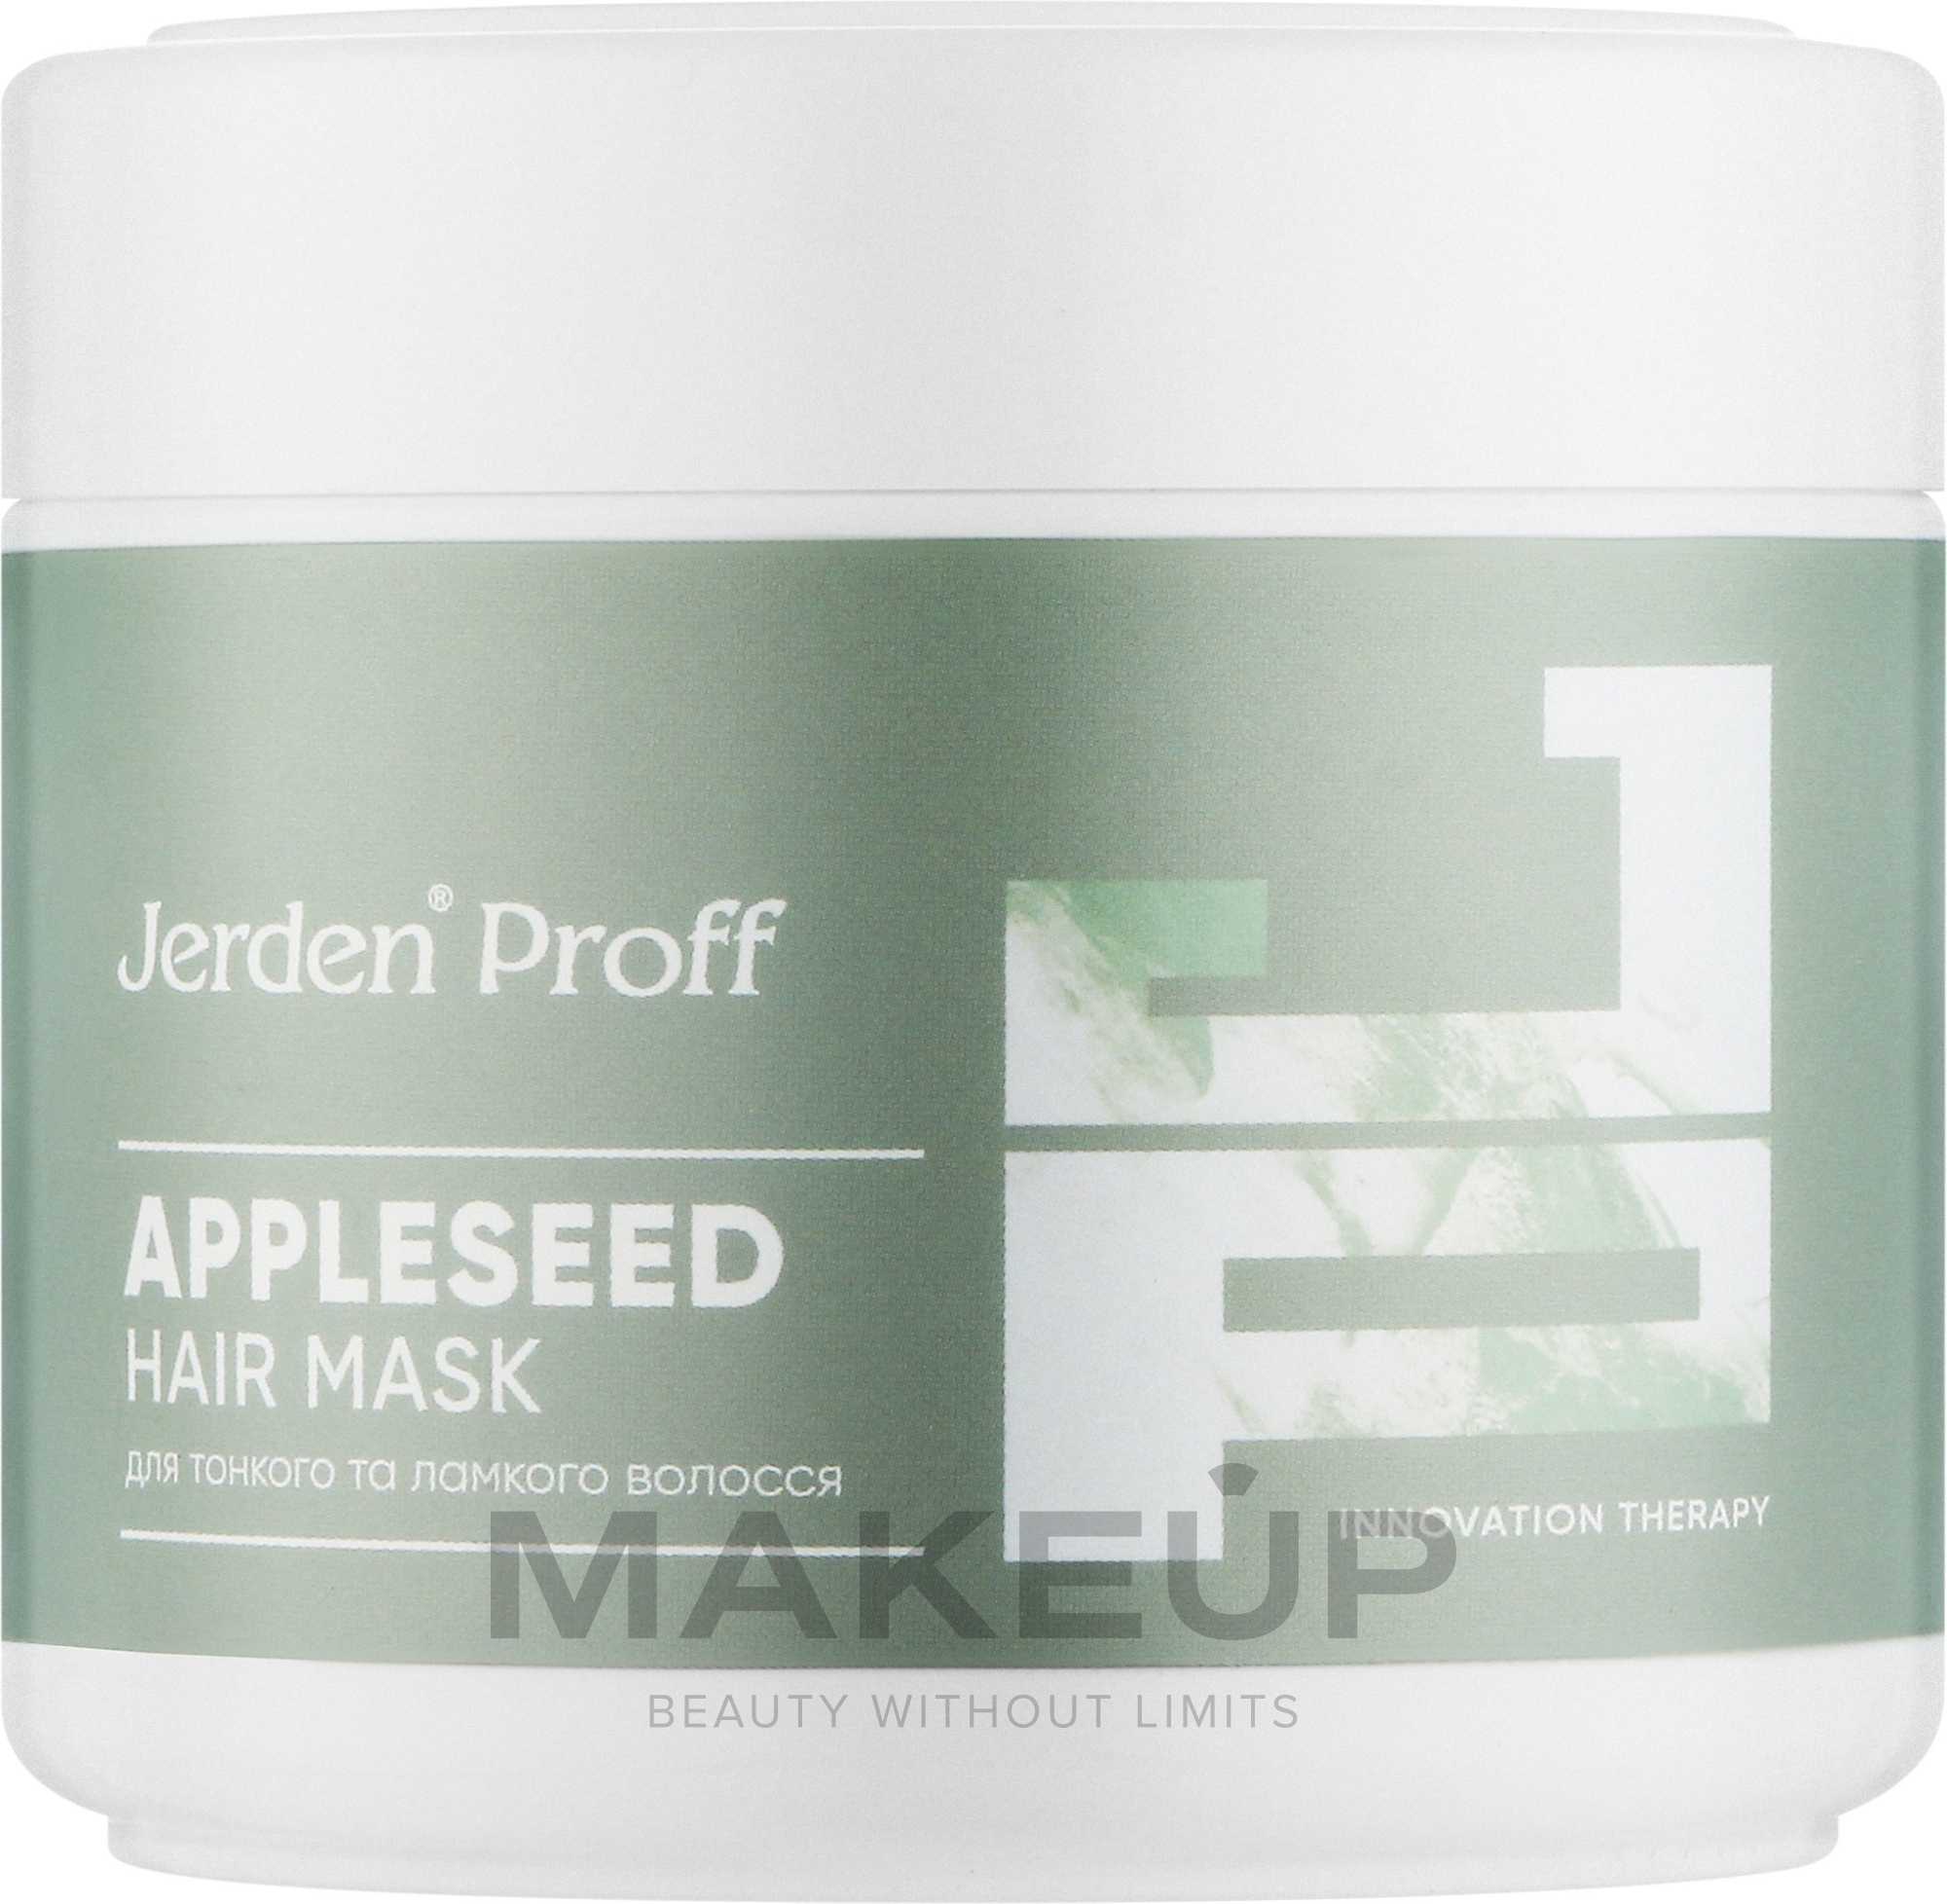 Маска укрепляющая с маслом семян яблока и пантенолом - Jerden Proff Appleseed Hair Mask — фото 300ml